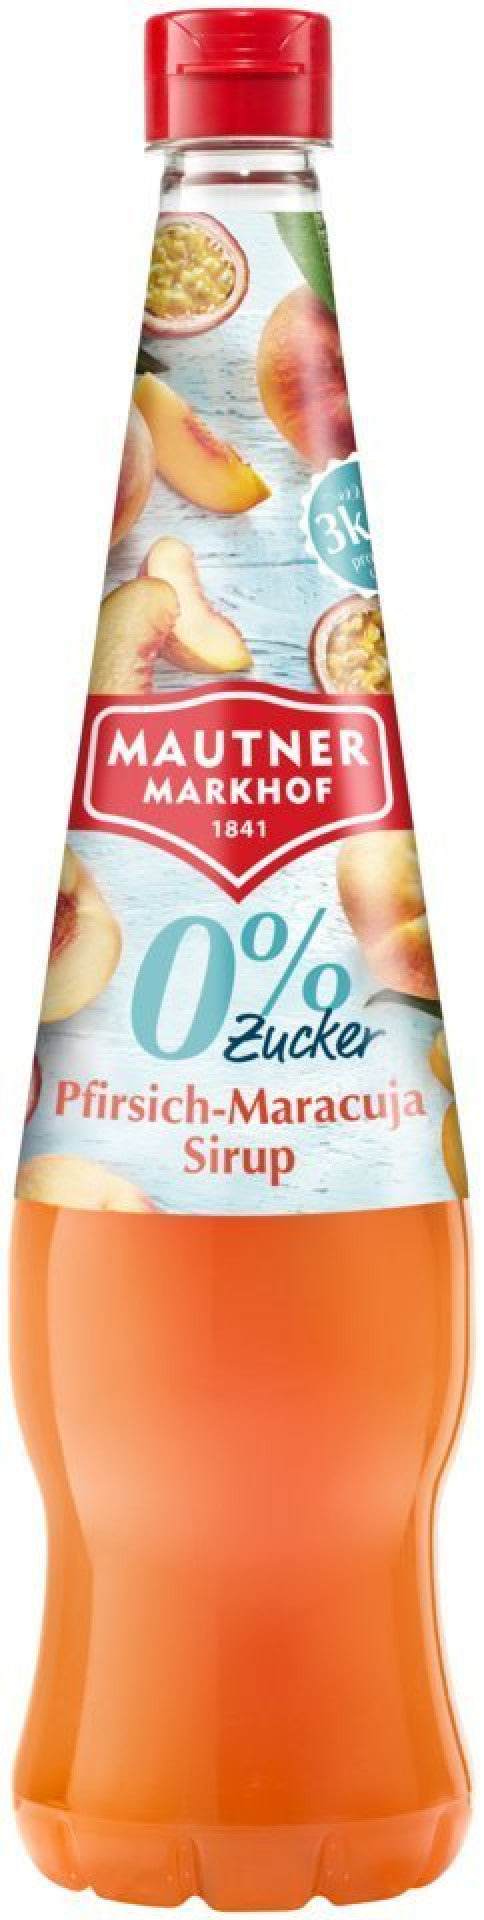 Mautner Markhof 0% Zucker Sirup Pfirsich-Maracuja